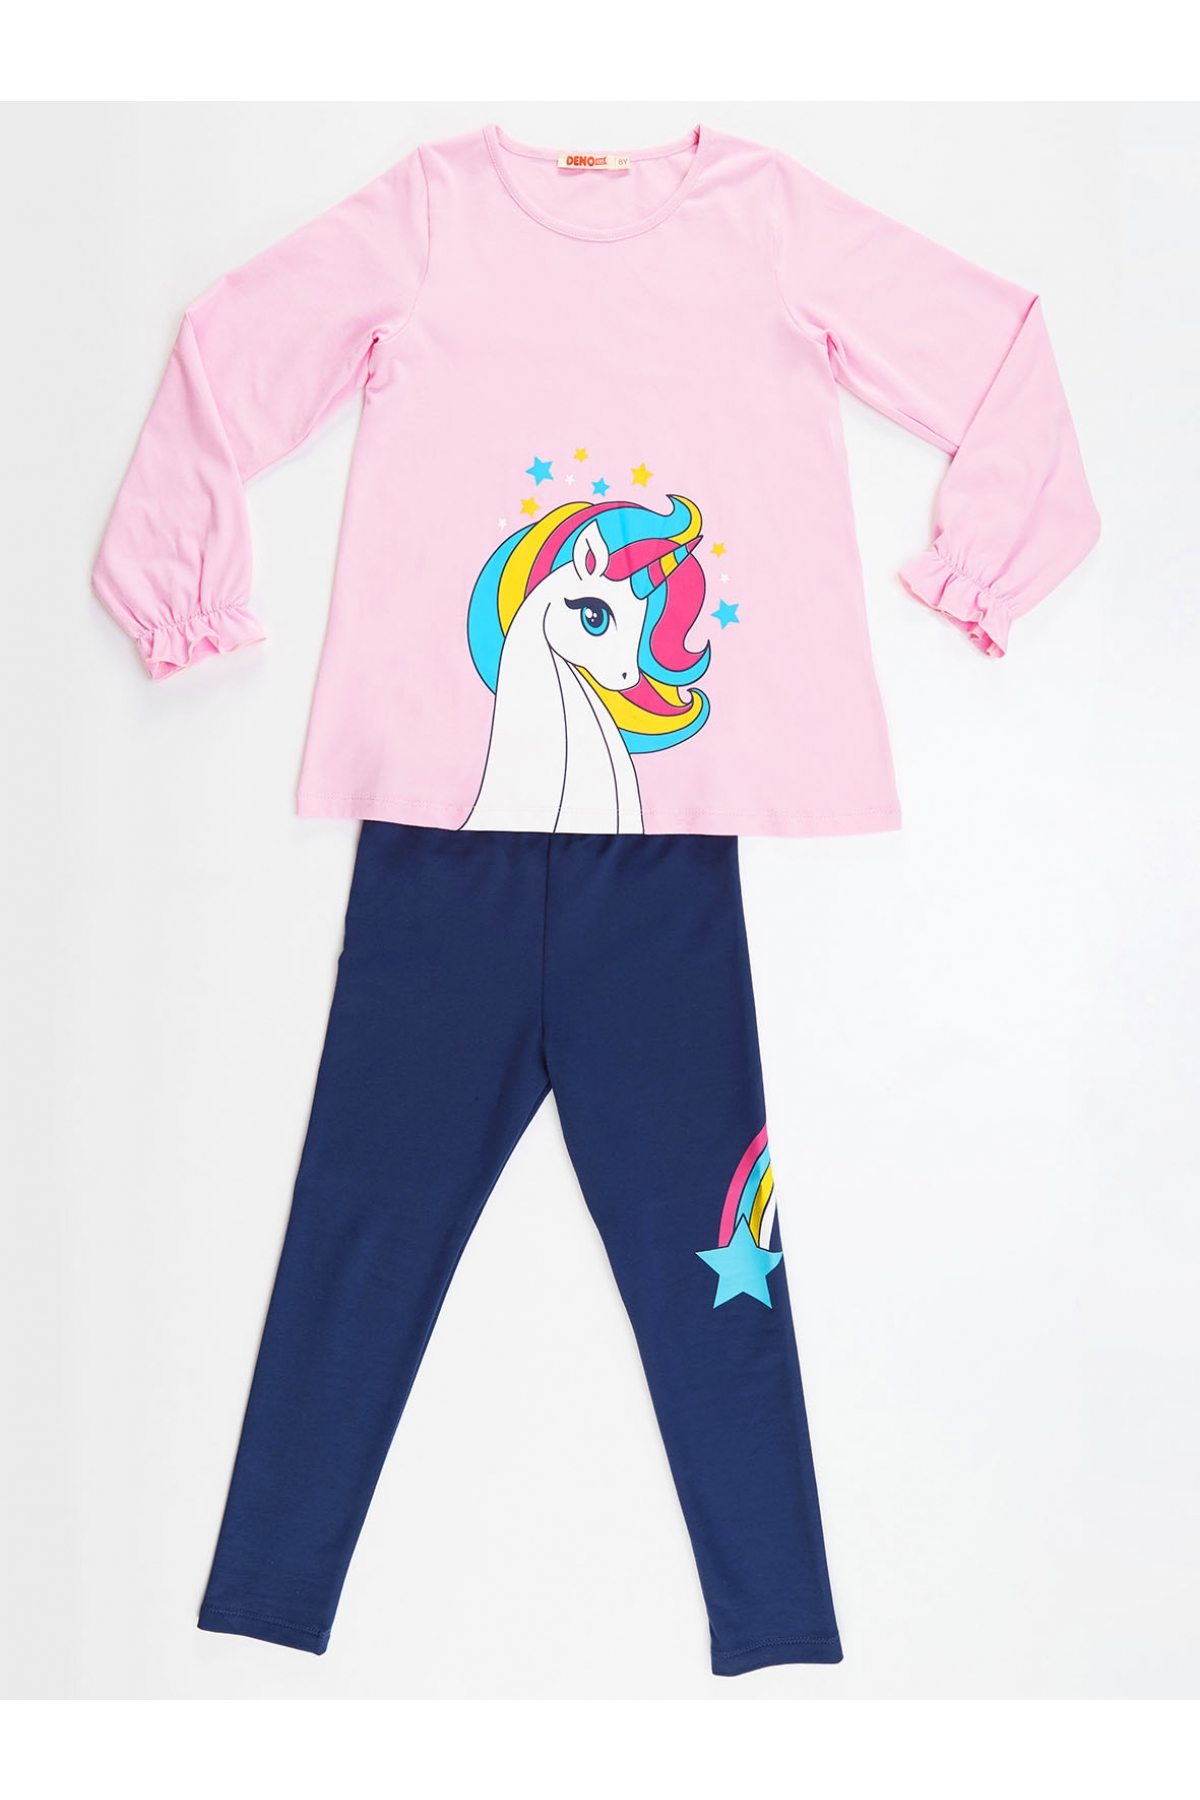 Denokids Rainbow Star Unicorn Kız Çocuk Pembe T-shirt Lacivert Tayt Takım  200262063